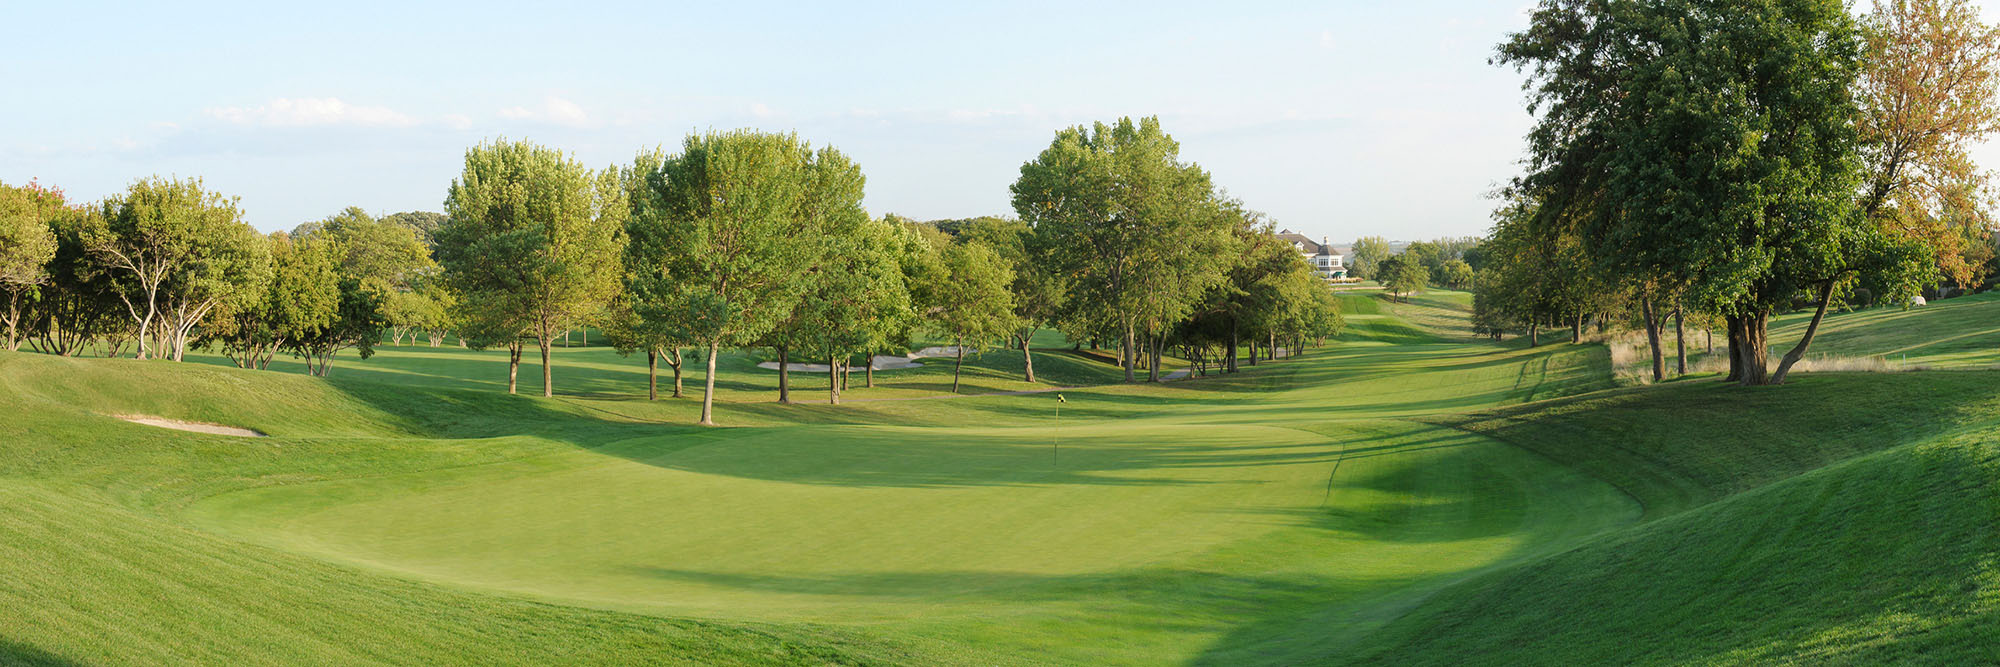 Golf Course Image - Glen Oaks No. 10